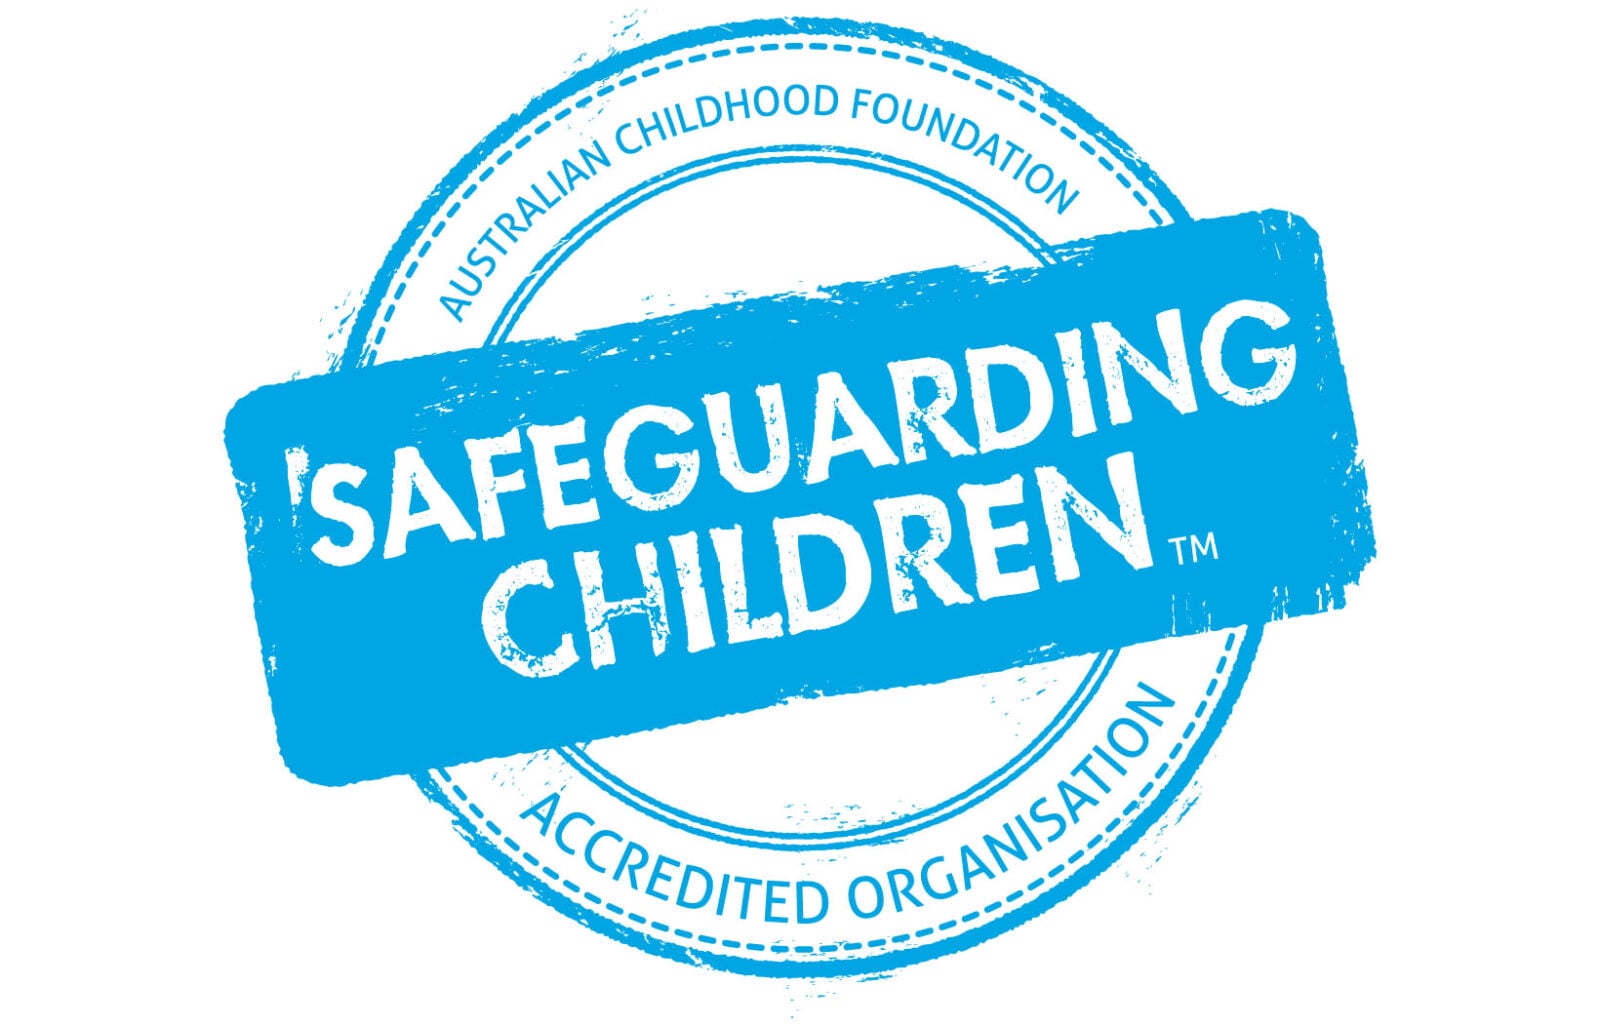 Australian Childhood Foundation Safeguarding Children Accredited Organisation logo